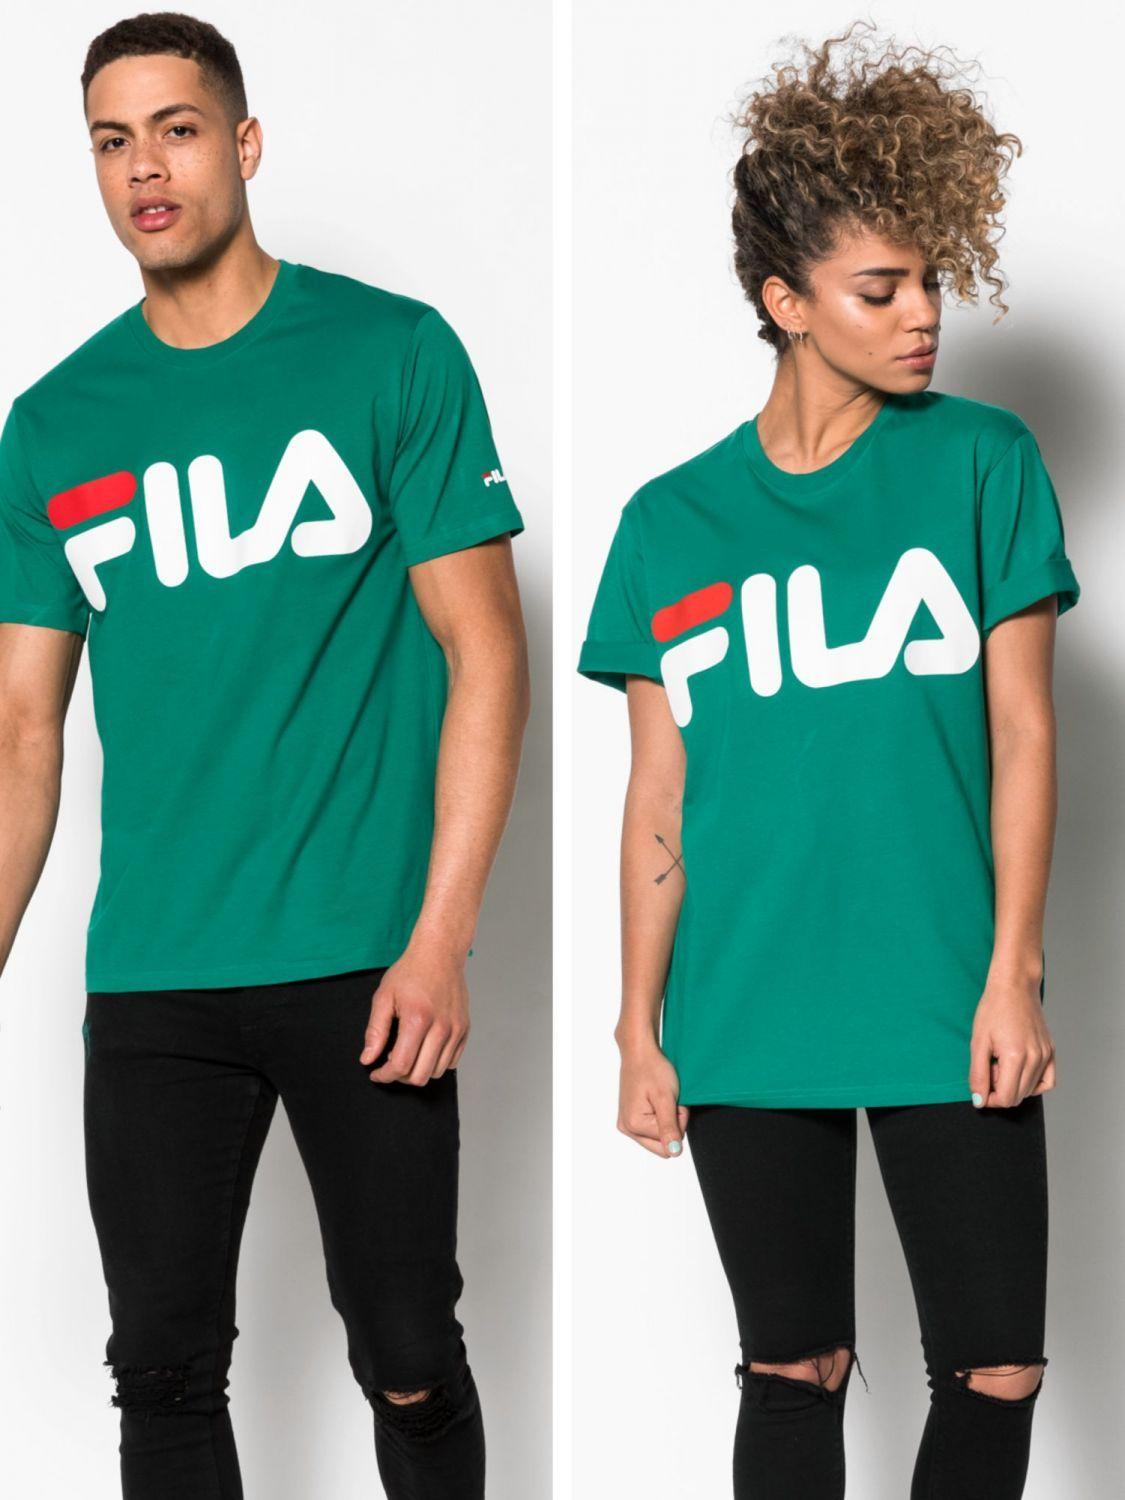 Old Fila Logo - Fila - Classic Logo Tee Unisex - 00014201600571 | FILA GERMANY